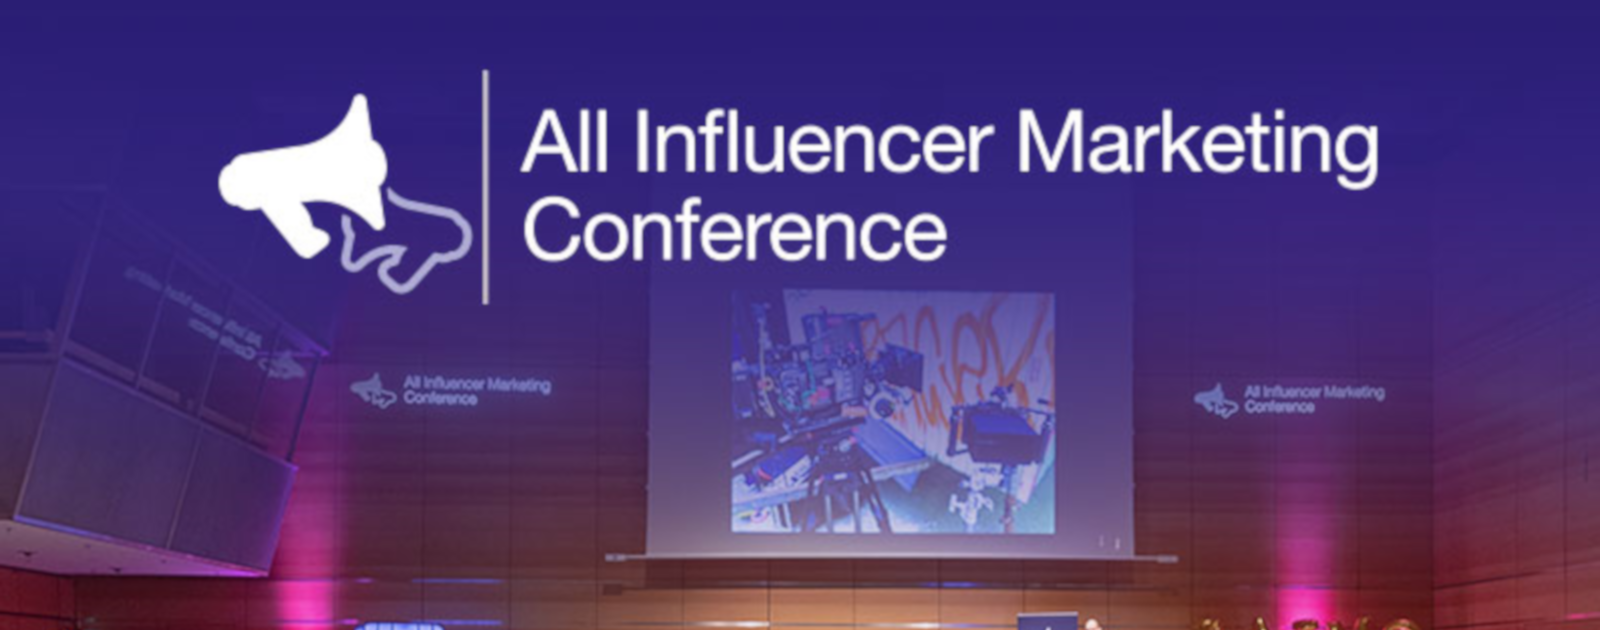 Social Media Marketing für alle Level: AllFacebook Marketing Conference 2020 - OnlineMarketing.de